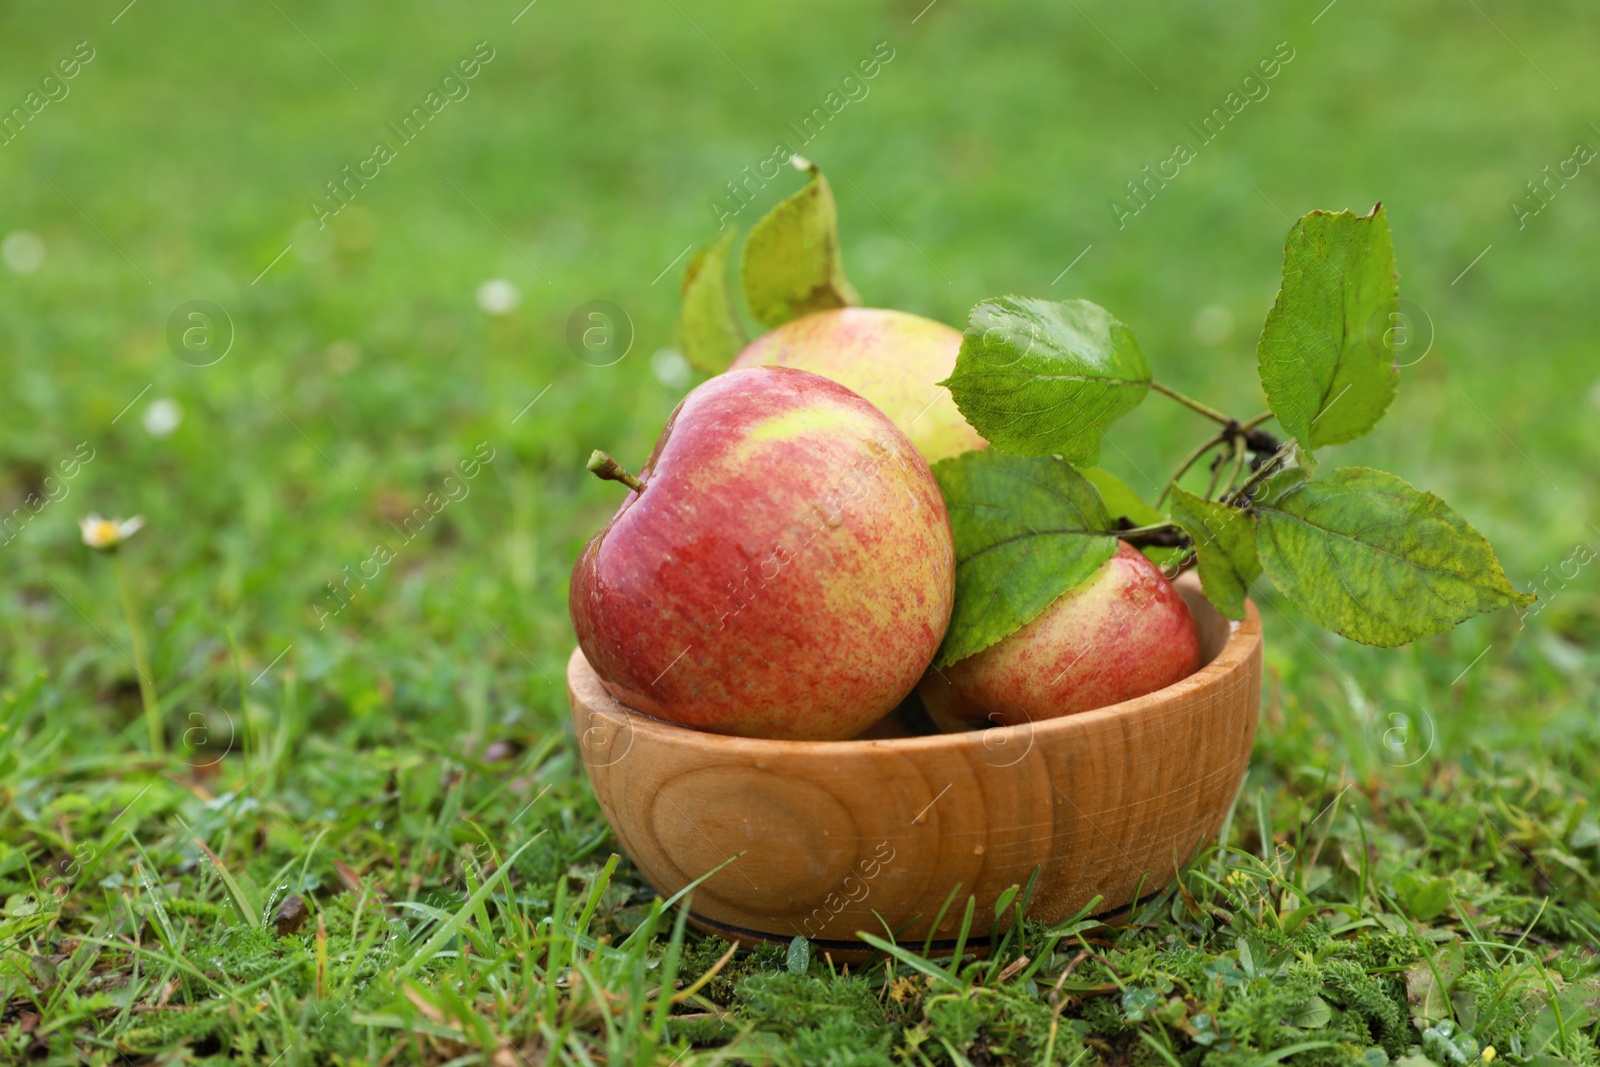 Photo of Dishware full of ripe apples on green grass